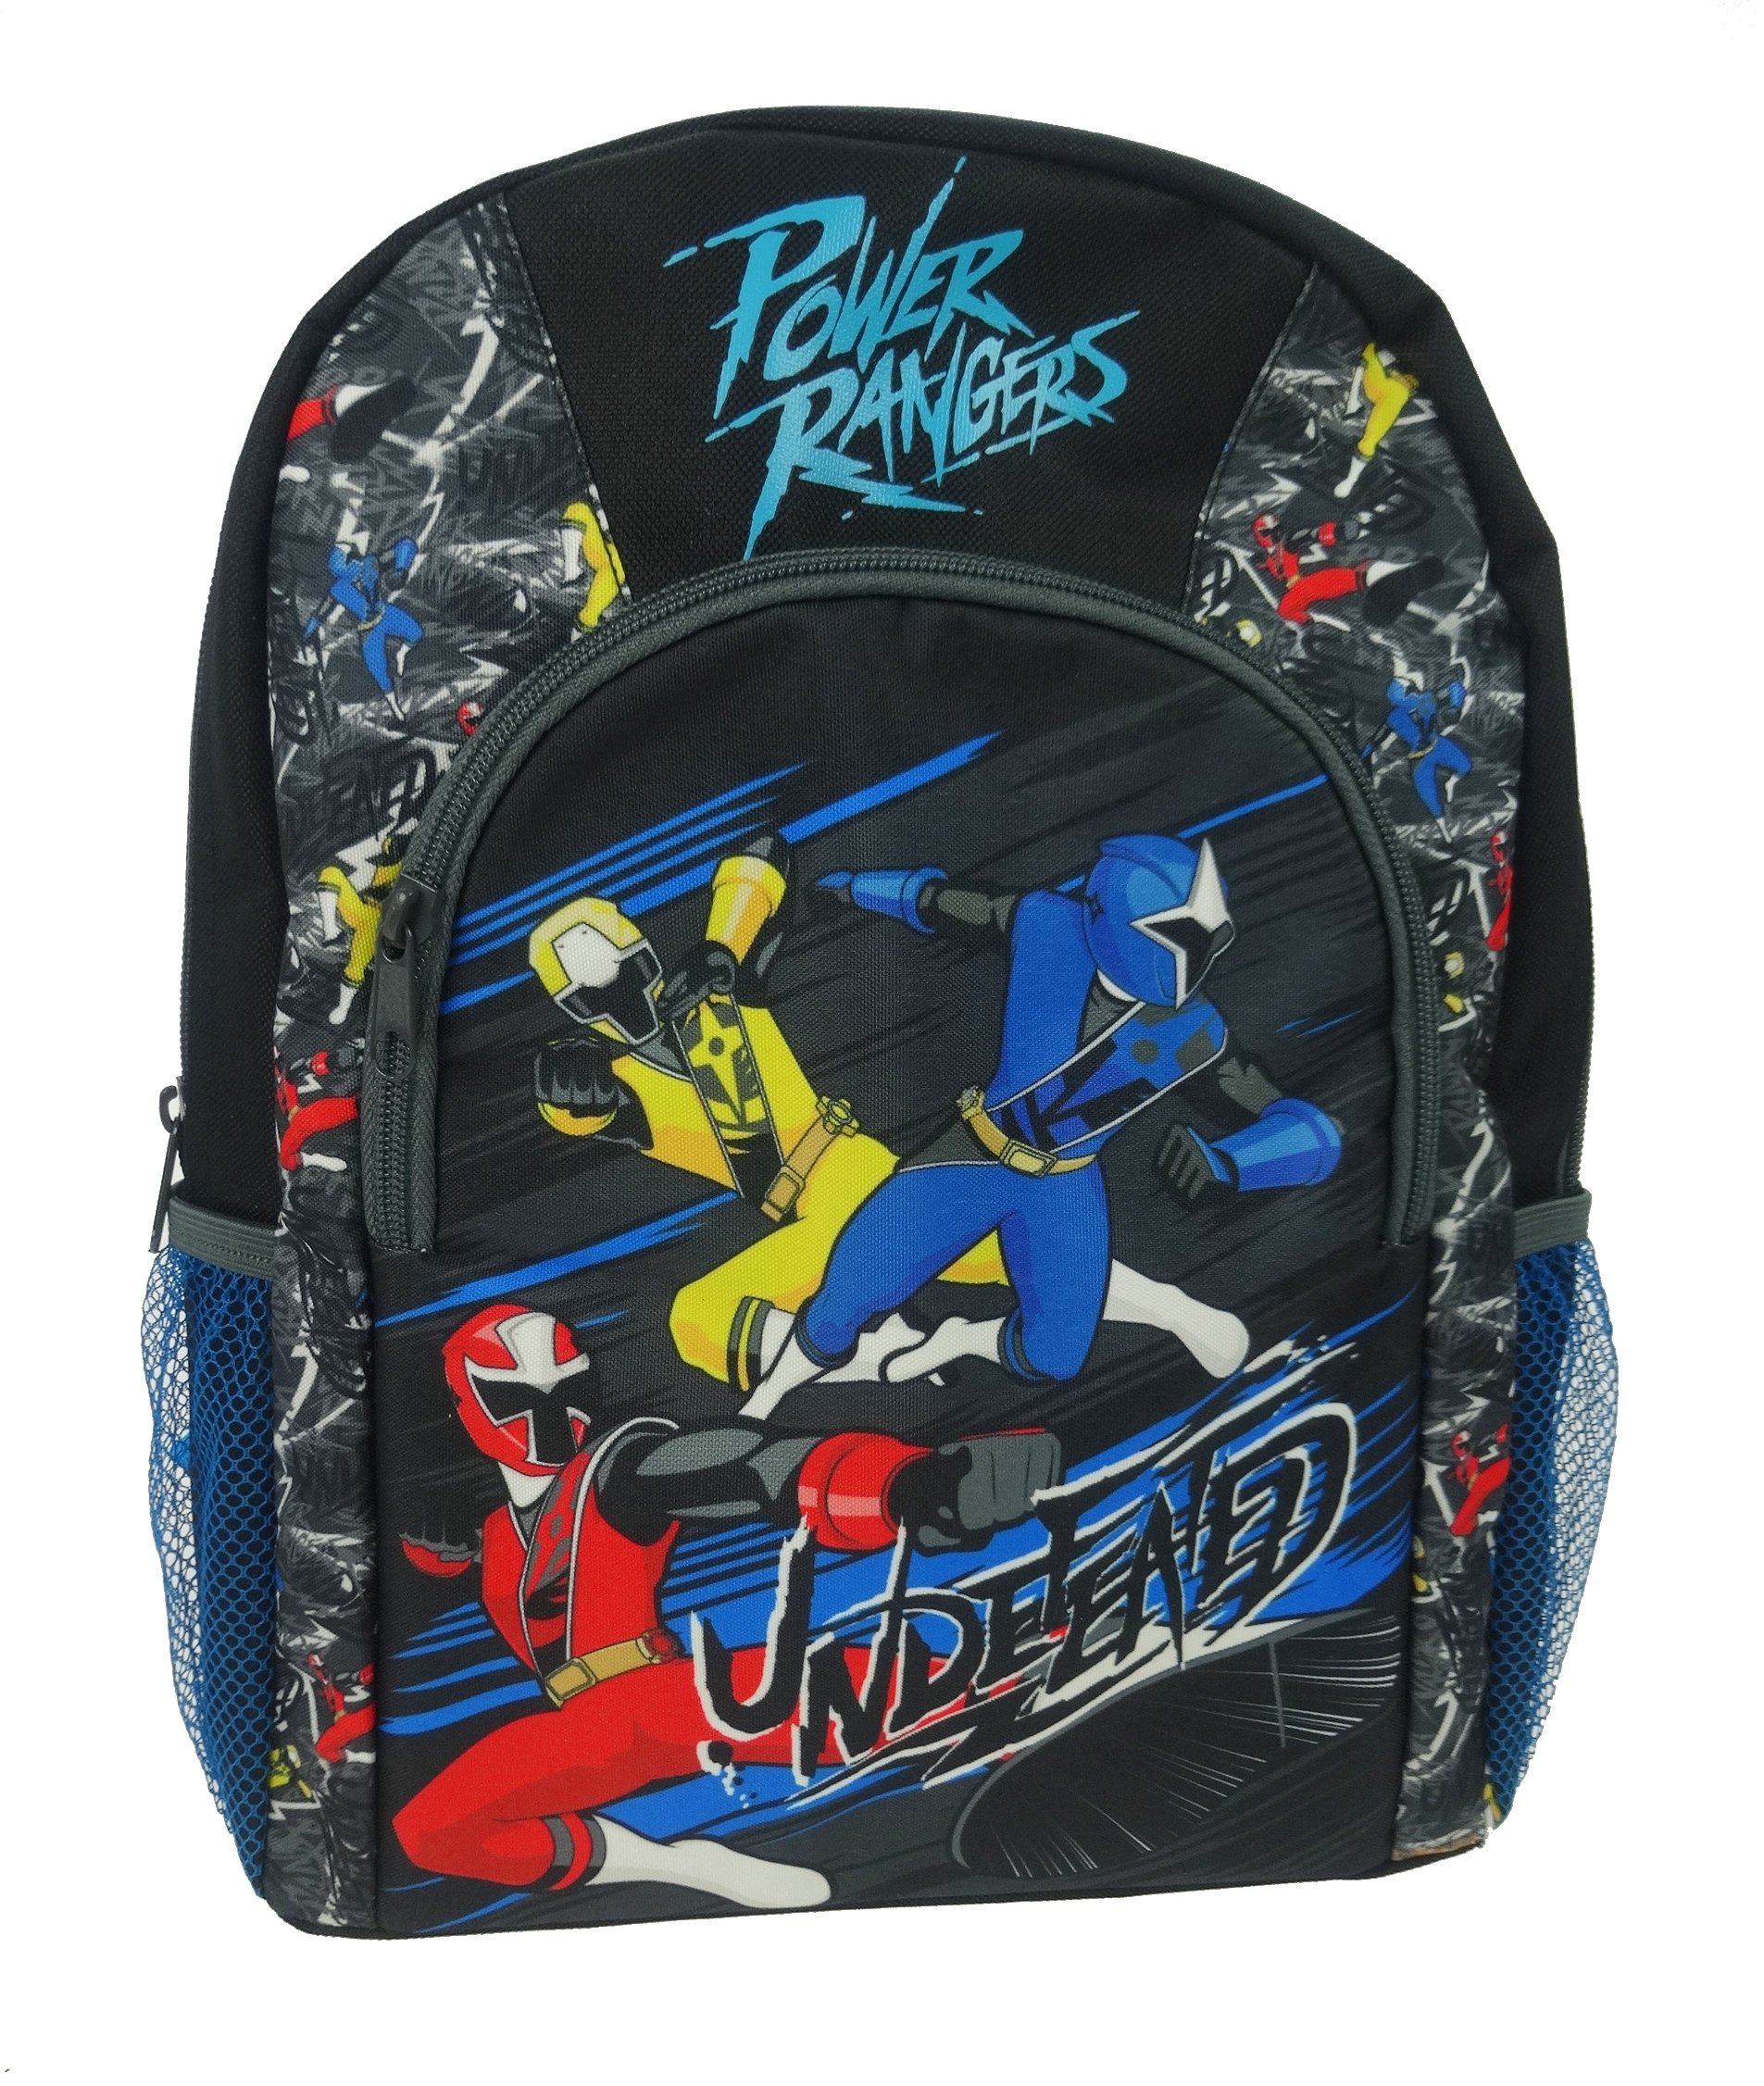 Power Rangers 'Undefeated' School Bag Rucksack Backpack